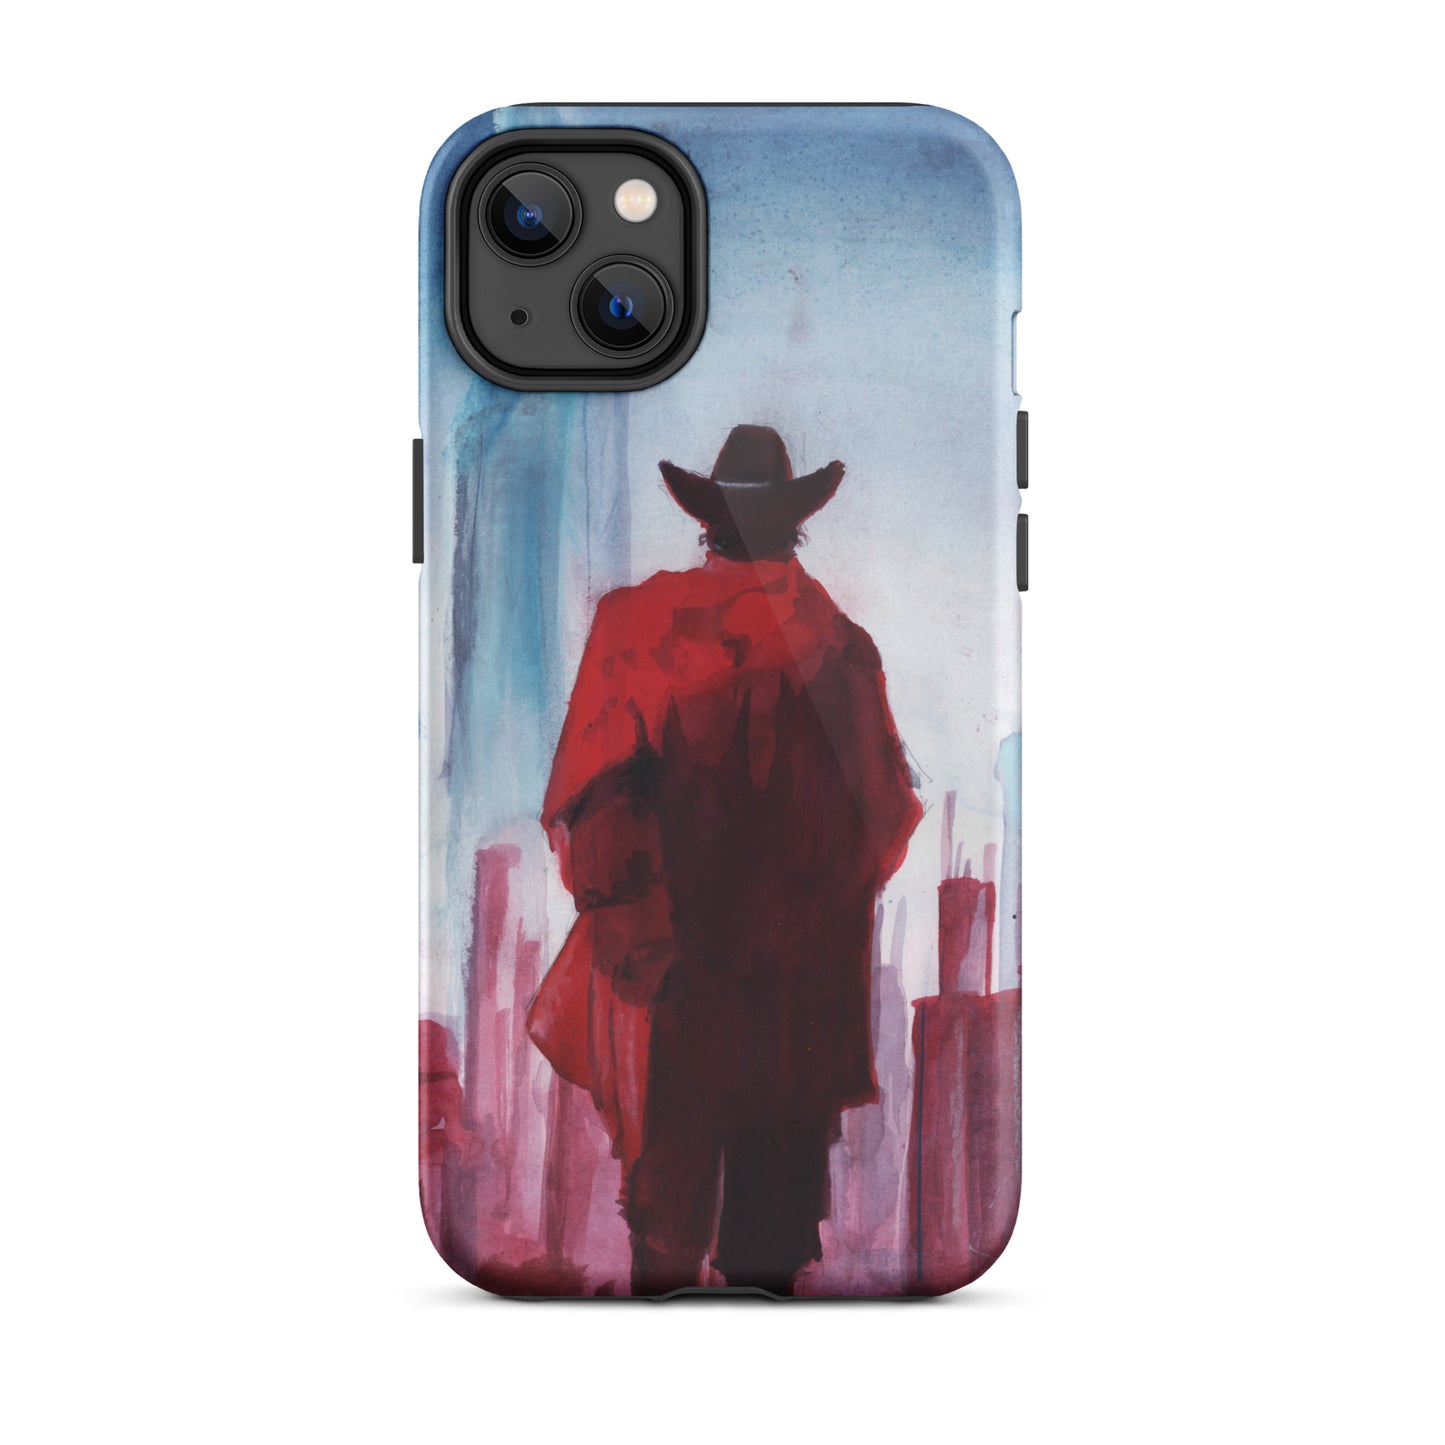 Dark Crystal Tower - Tough iPhone case